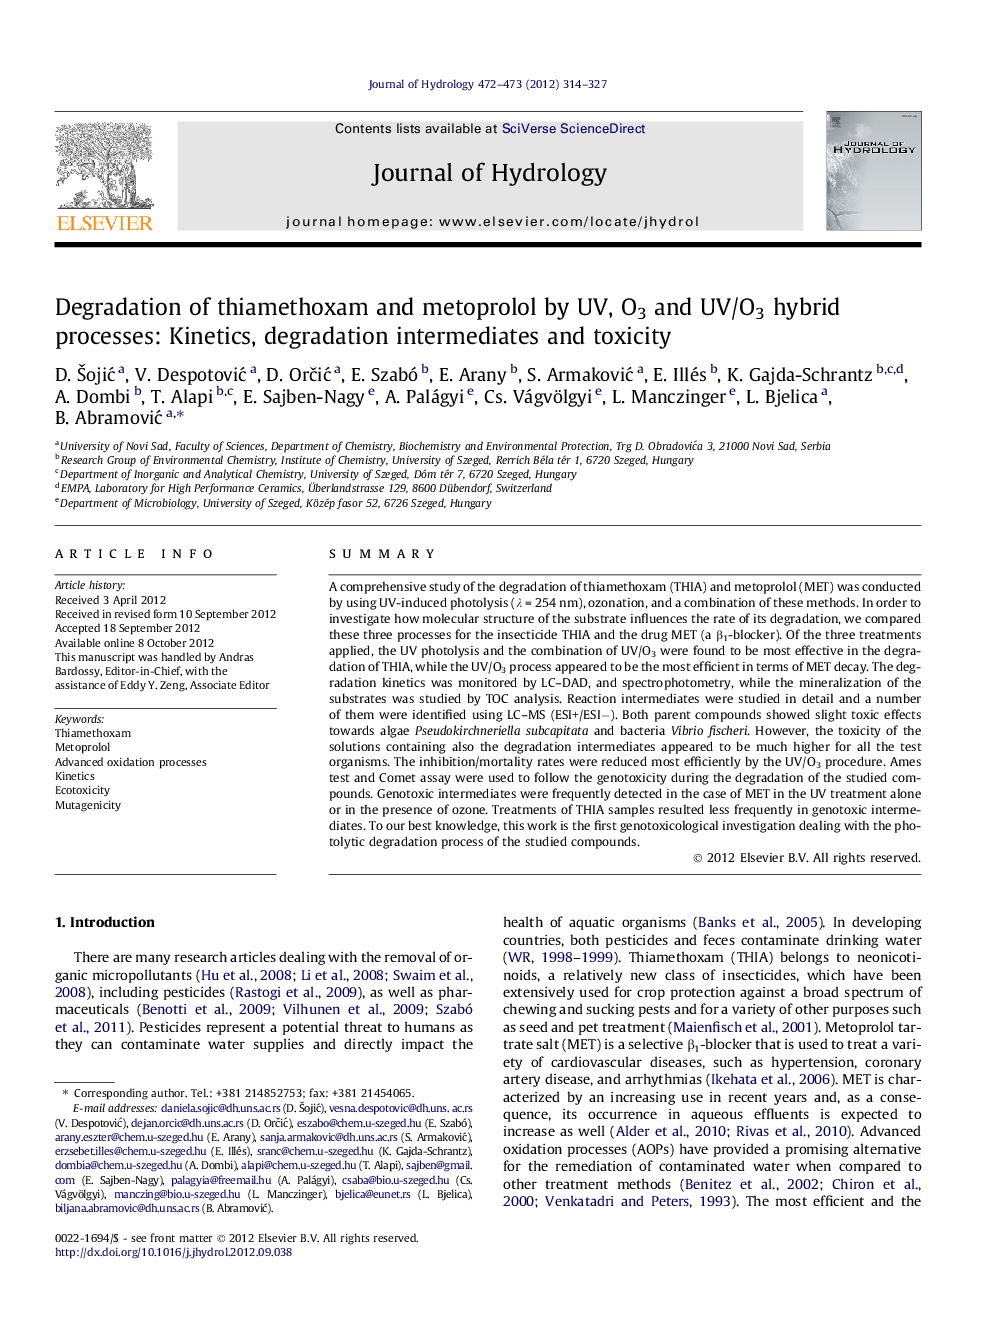 Degradation of thiamethoxam and metoprolol by UV, O3 and UV/O3 hybrid processes: Kinetics, degradation intermediates and toxicity